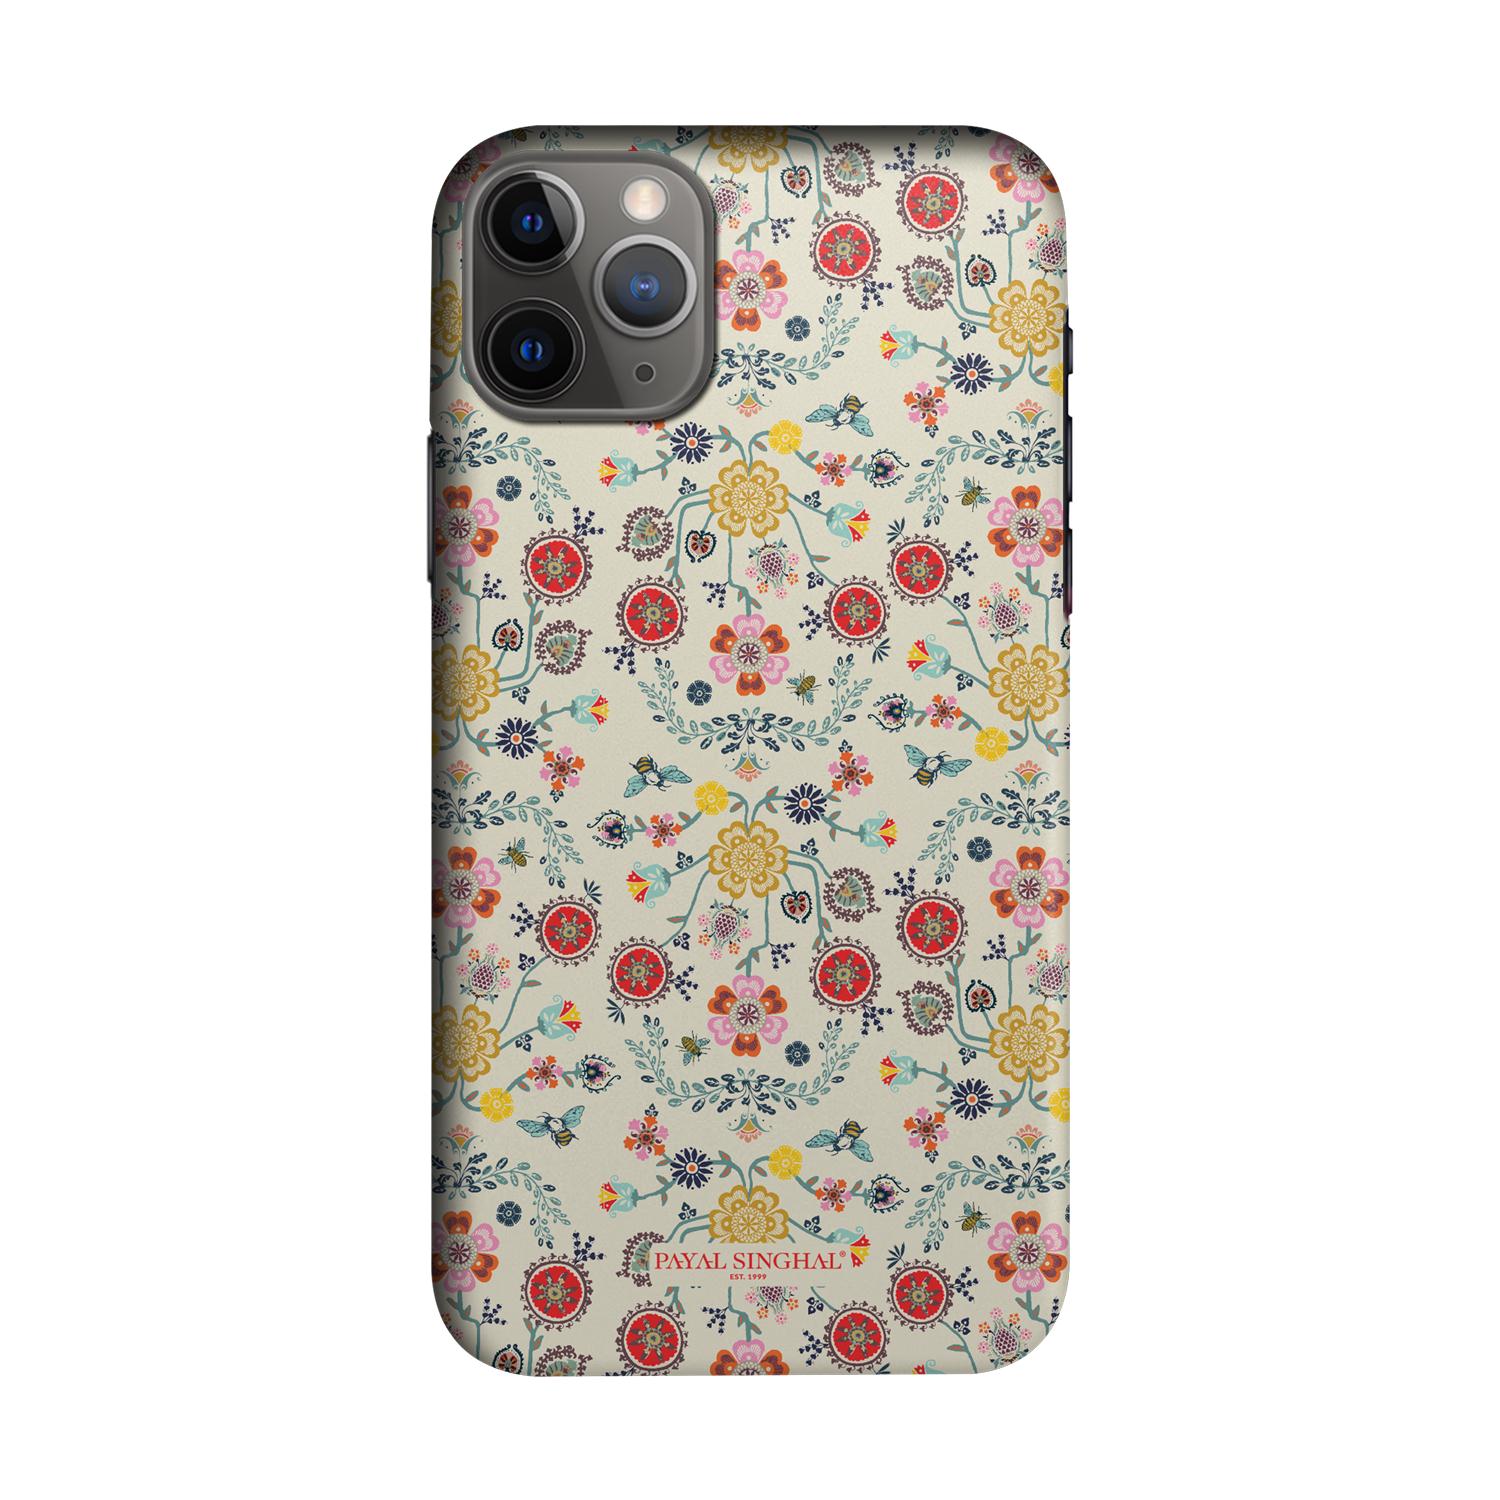 Buy Payal Singhal Spring - Sleek Phone Case for iPhone 11 Pro Max Online